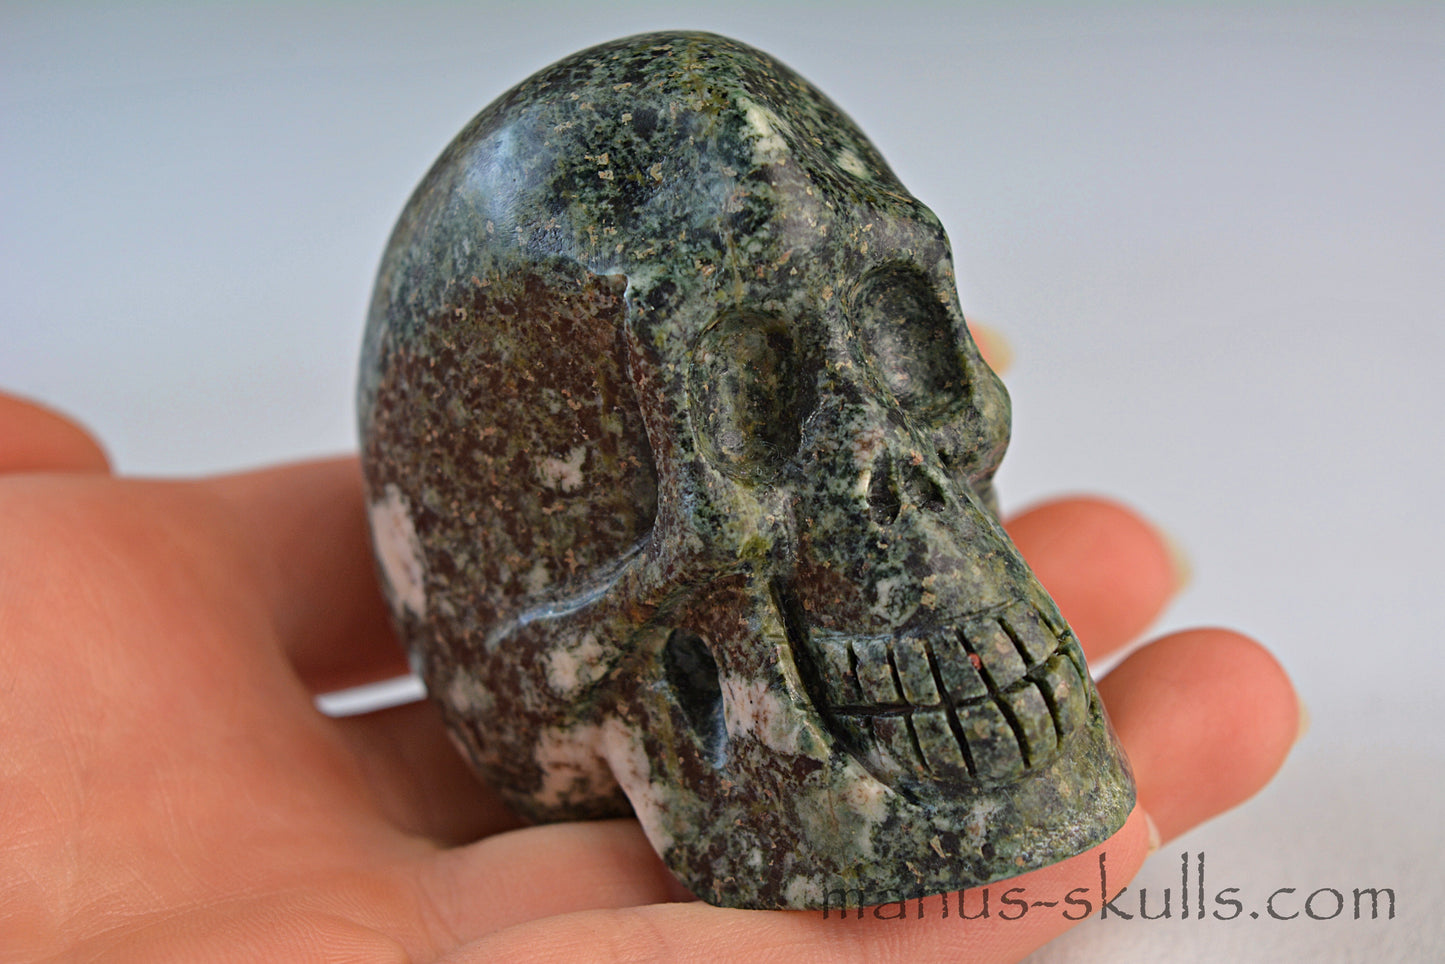 Preseli Bluestone Skull